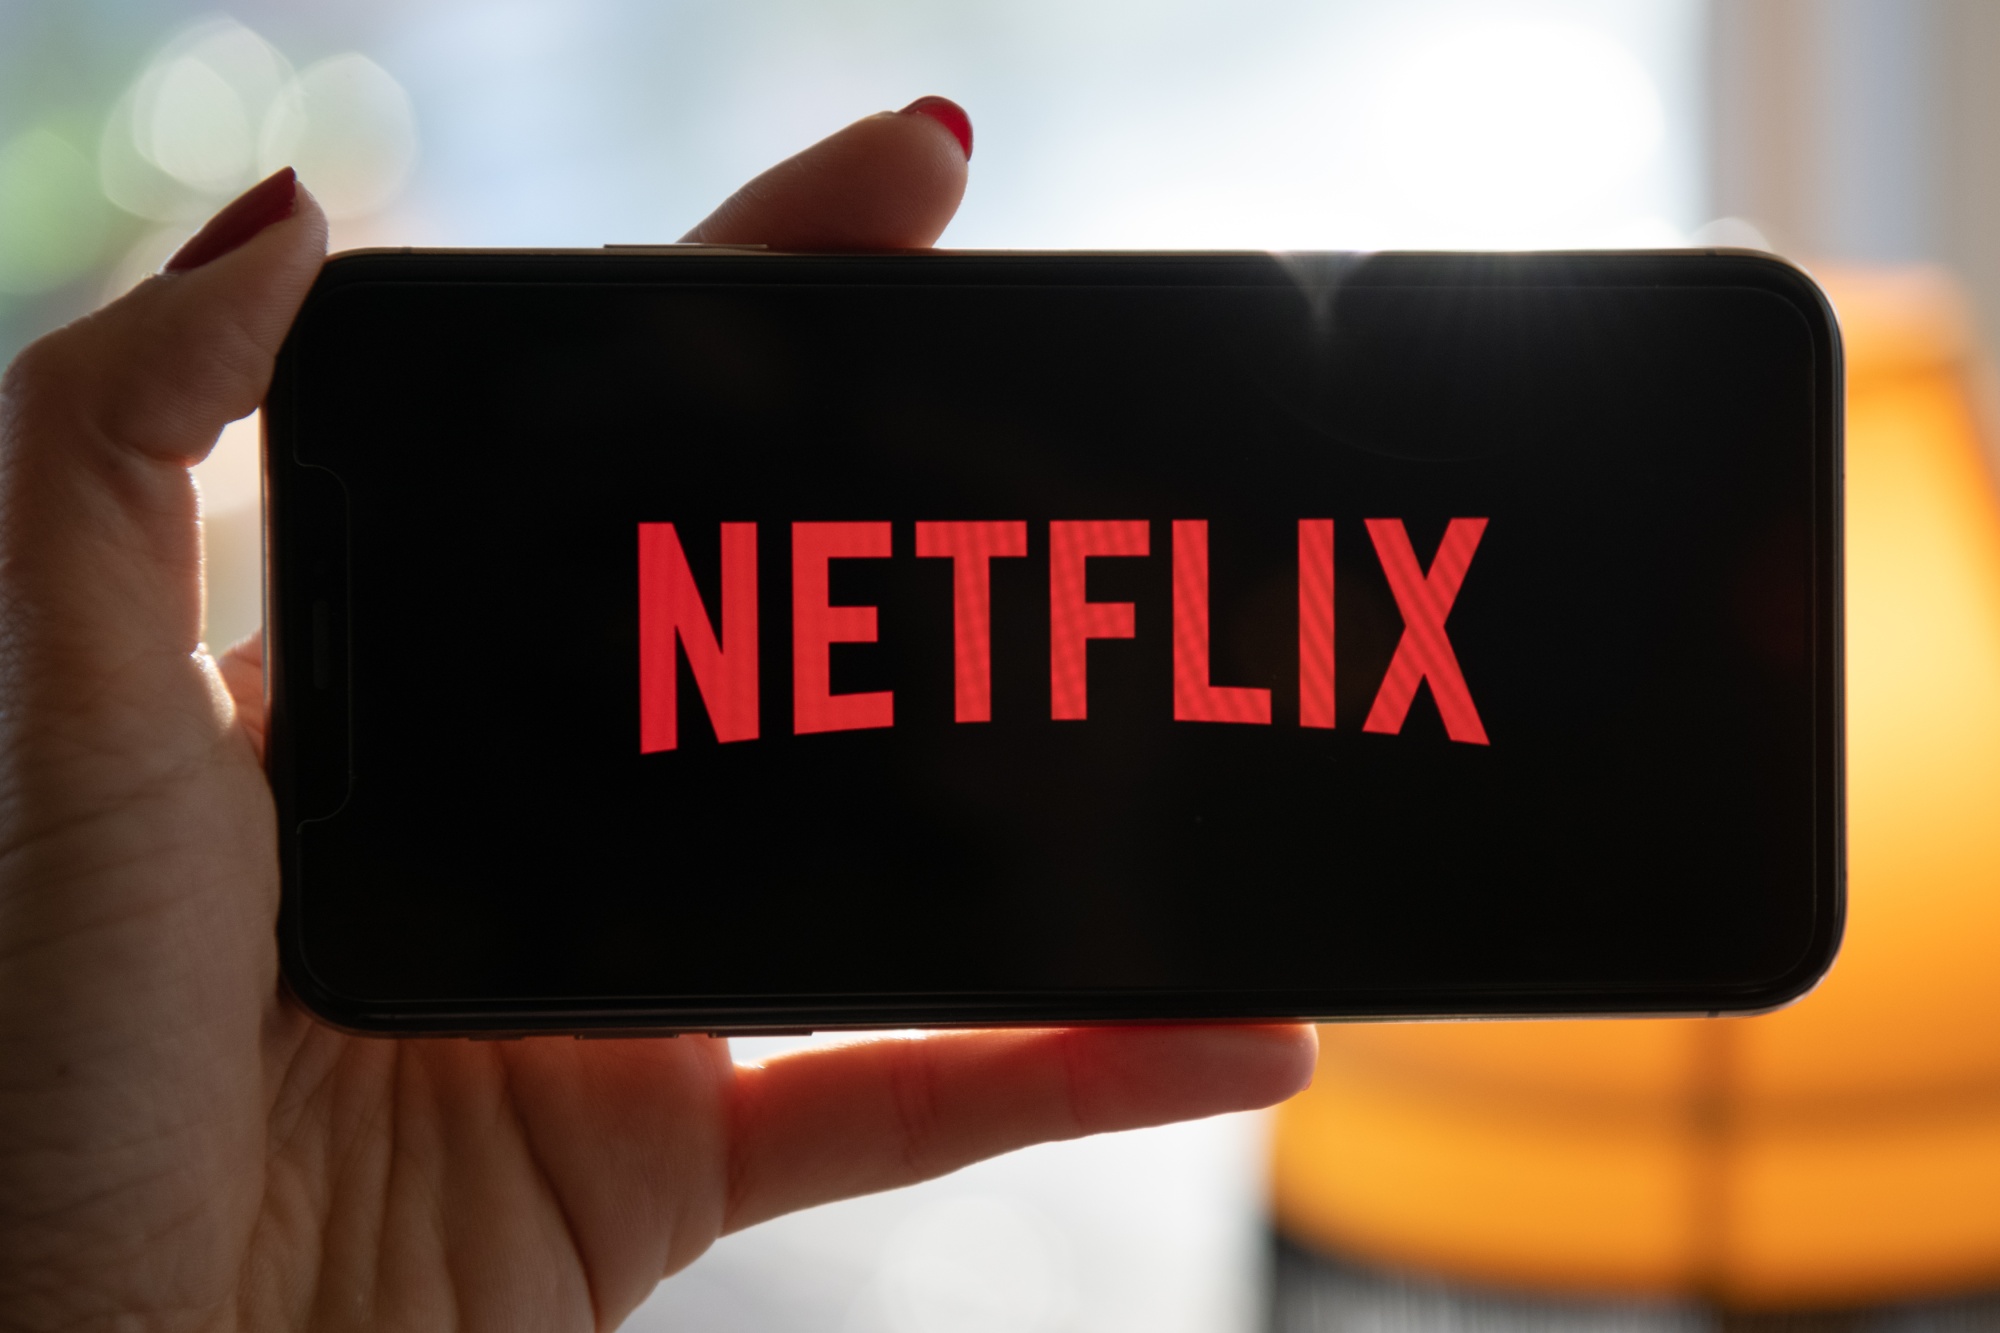 Los Gatos: Petition drive supporting Netflix development begins